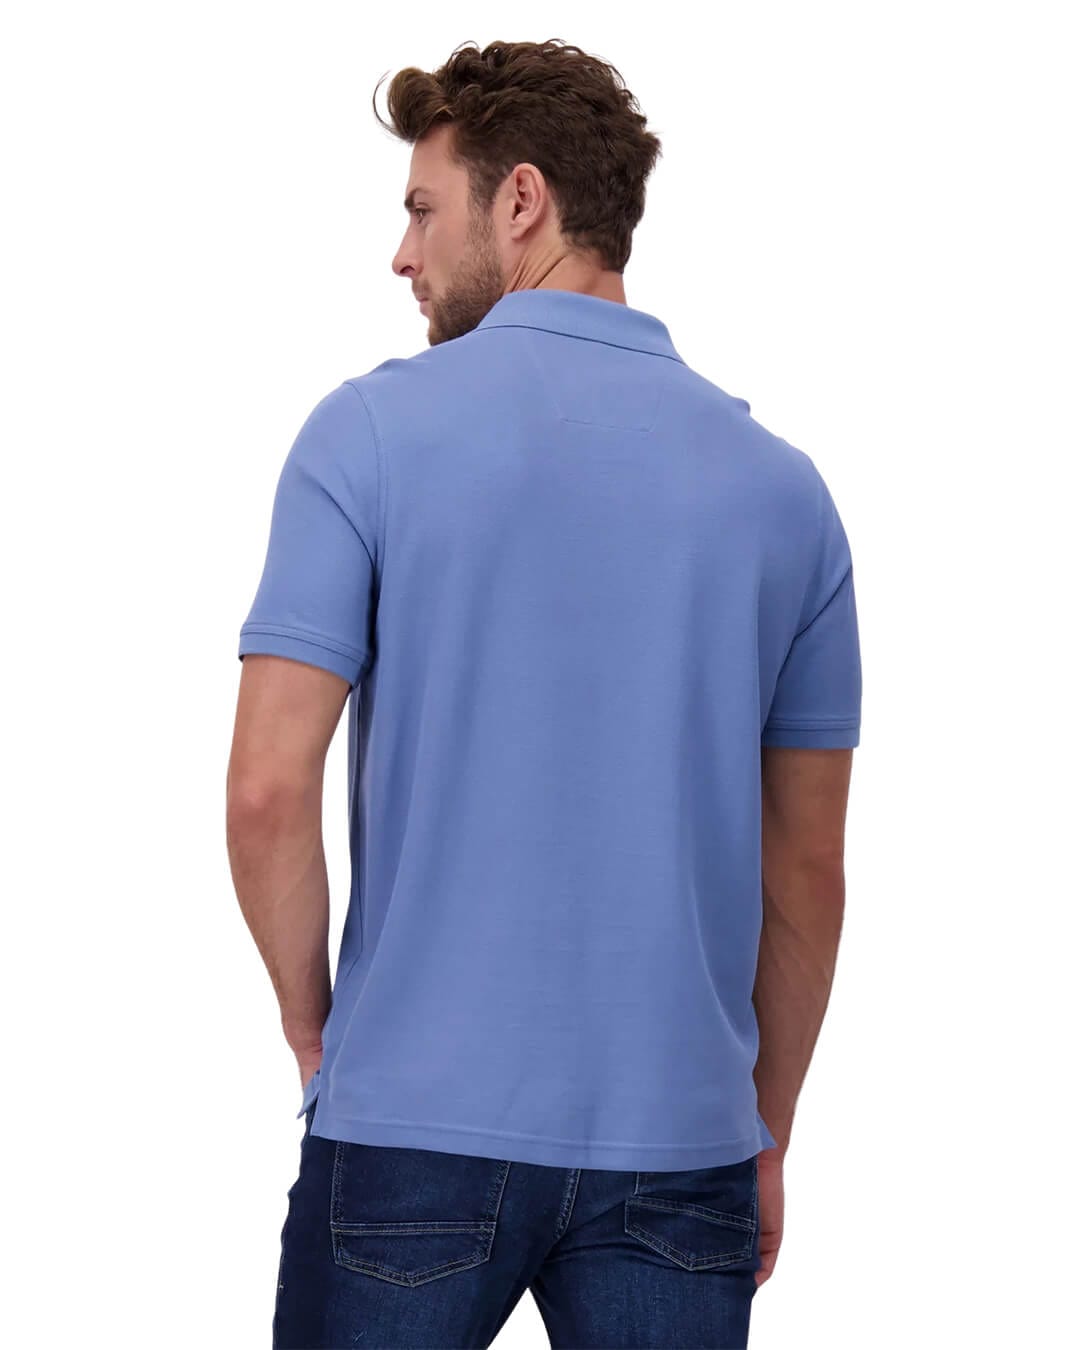 Fynch-Hatton Polo Shirts Fynch-Hatton Classic Supima Cotton Blue Polo Shirt